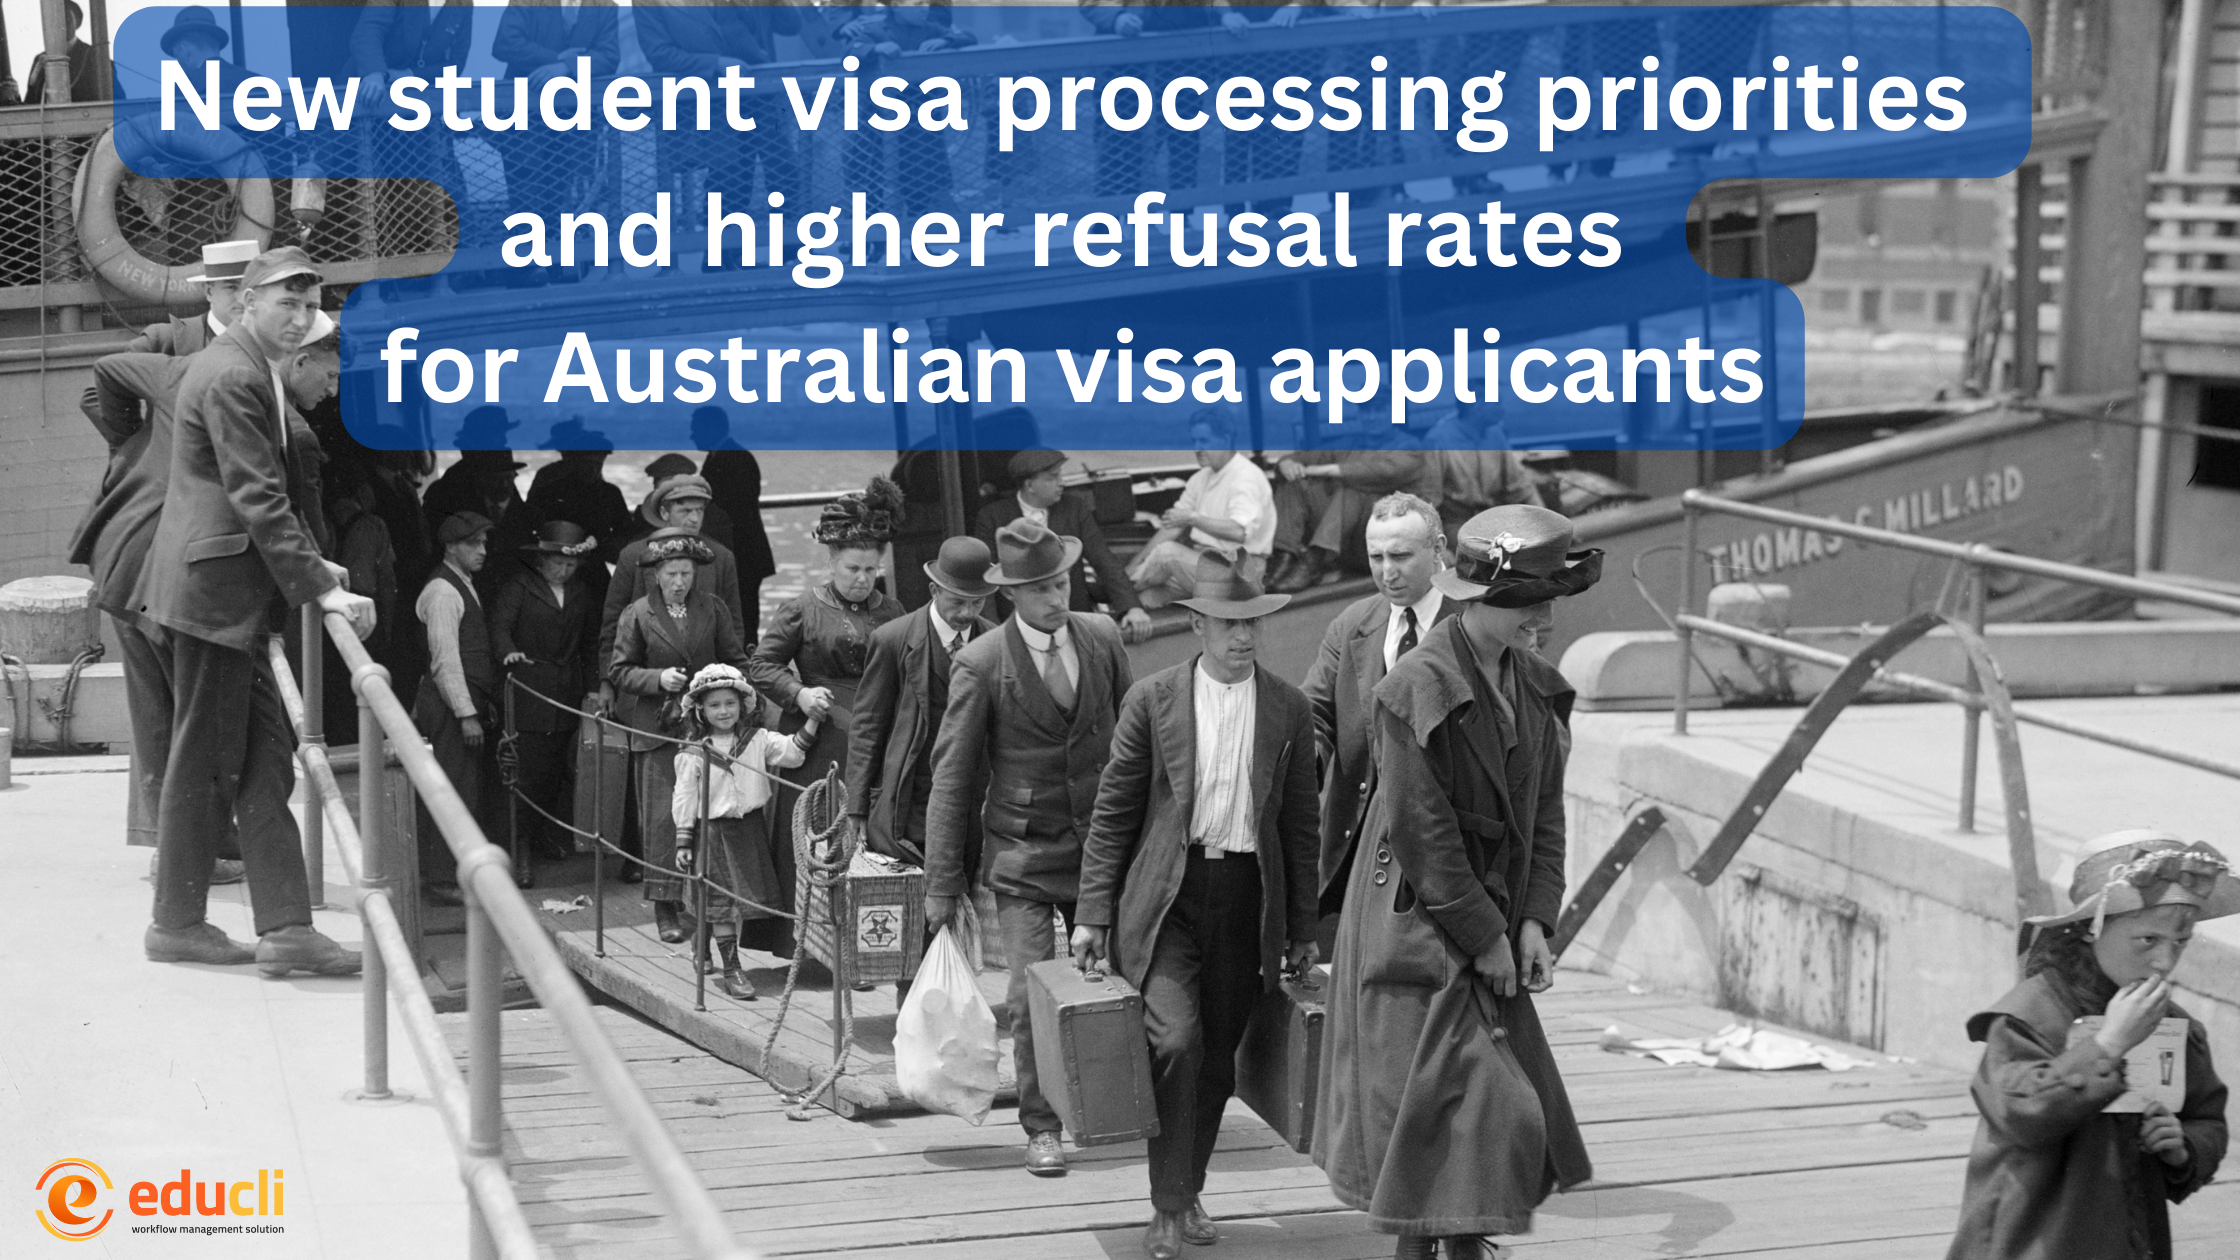 NEW STUDENT VISA PROCESSING PRIORITIES AND HIGHER REFUSAL RATES FOR AUSTRALIAN VISA APPLICANTS